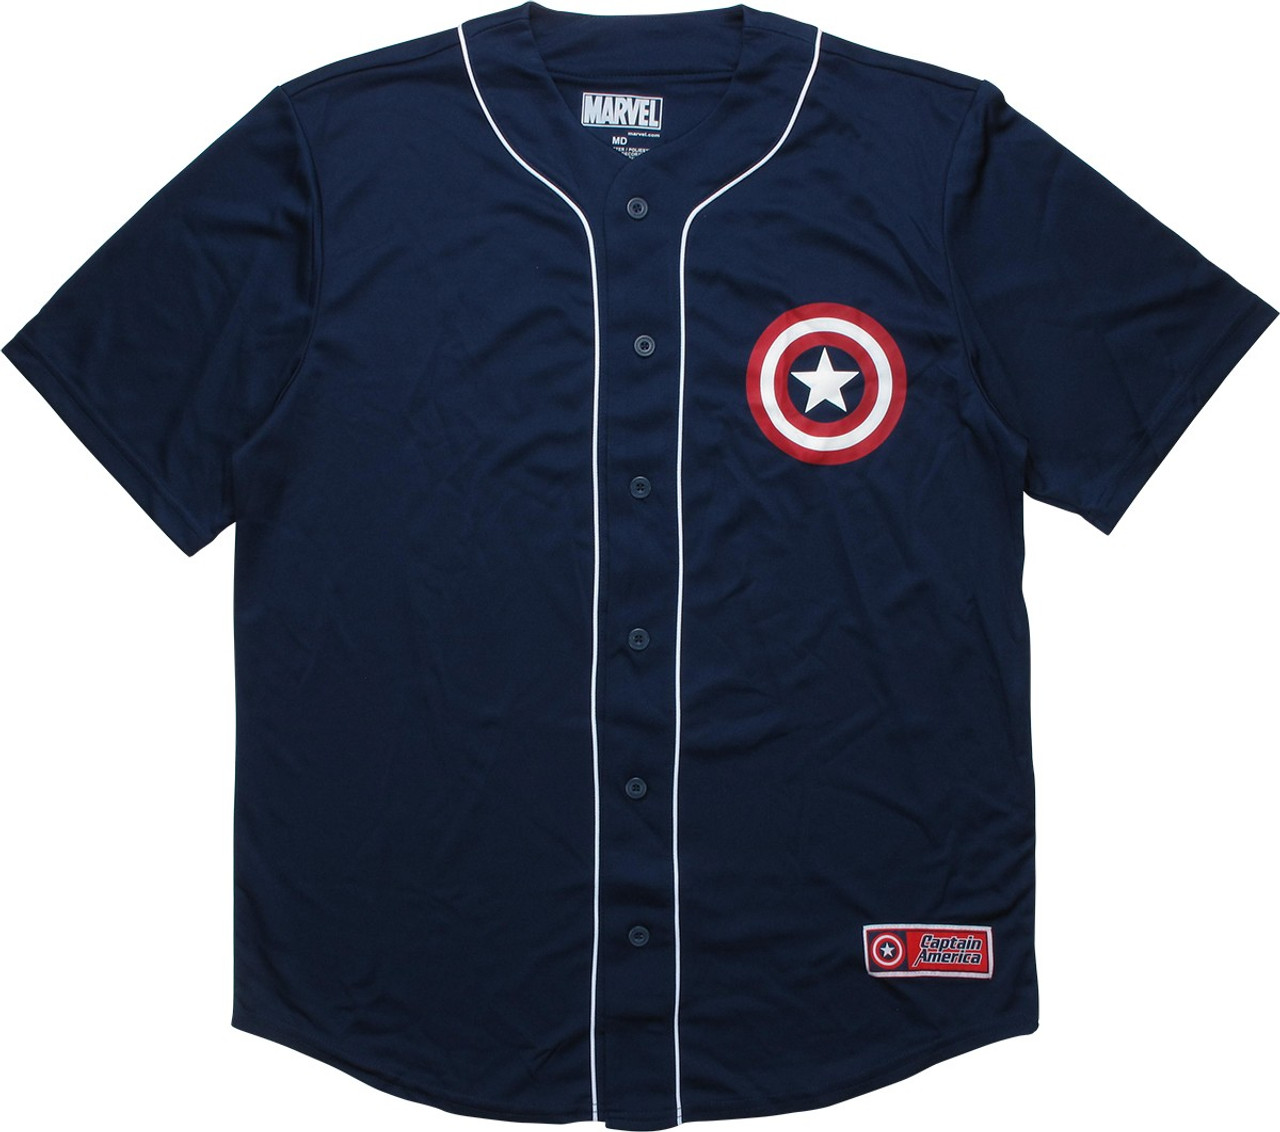 captain america baseball jersey